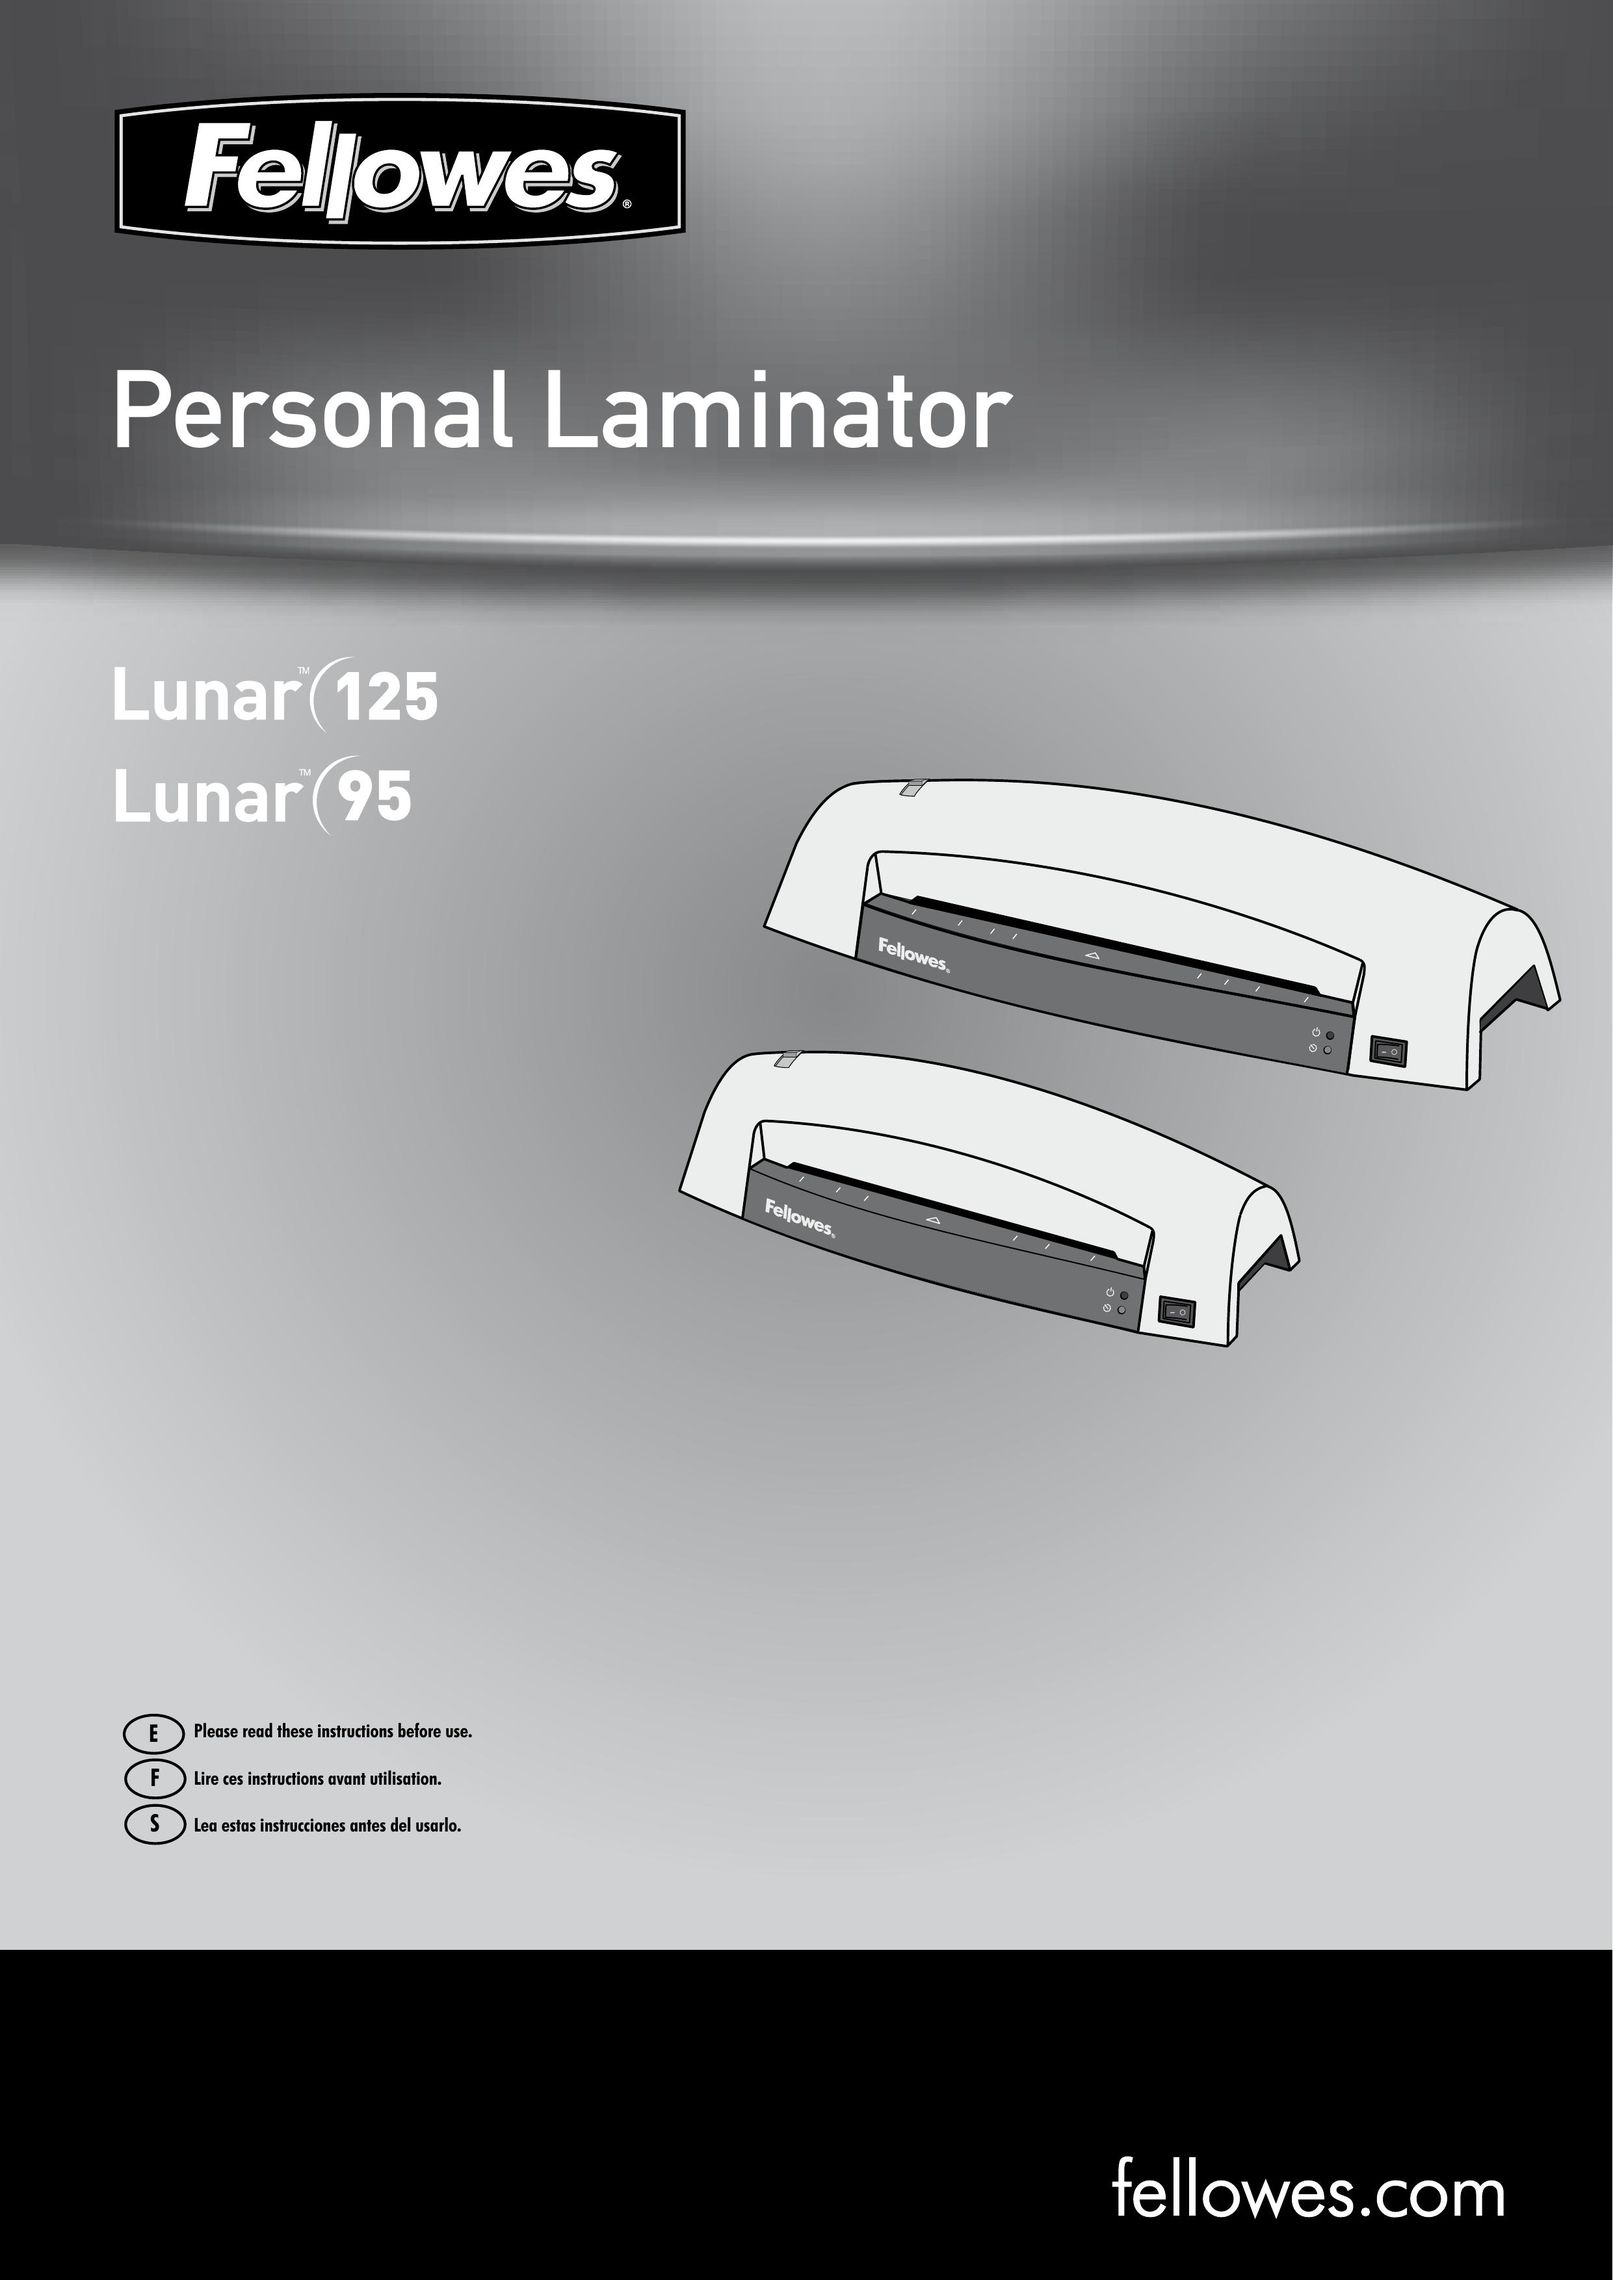 Fellowes Lunar 95 Laminator User Manual